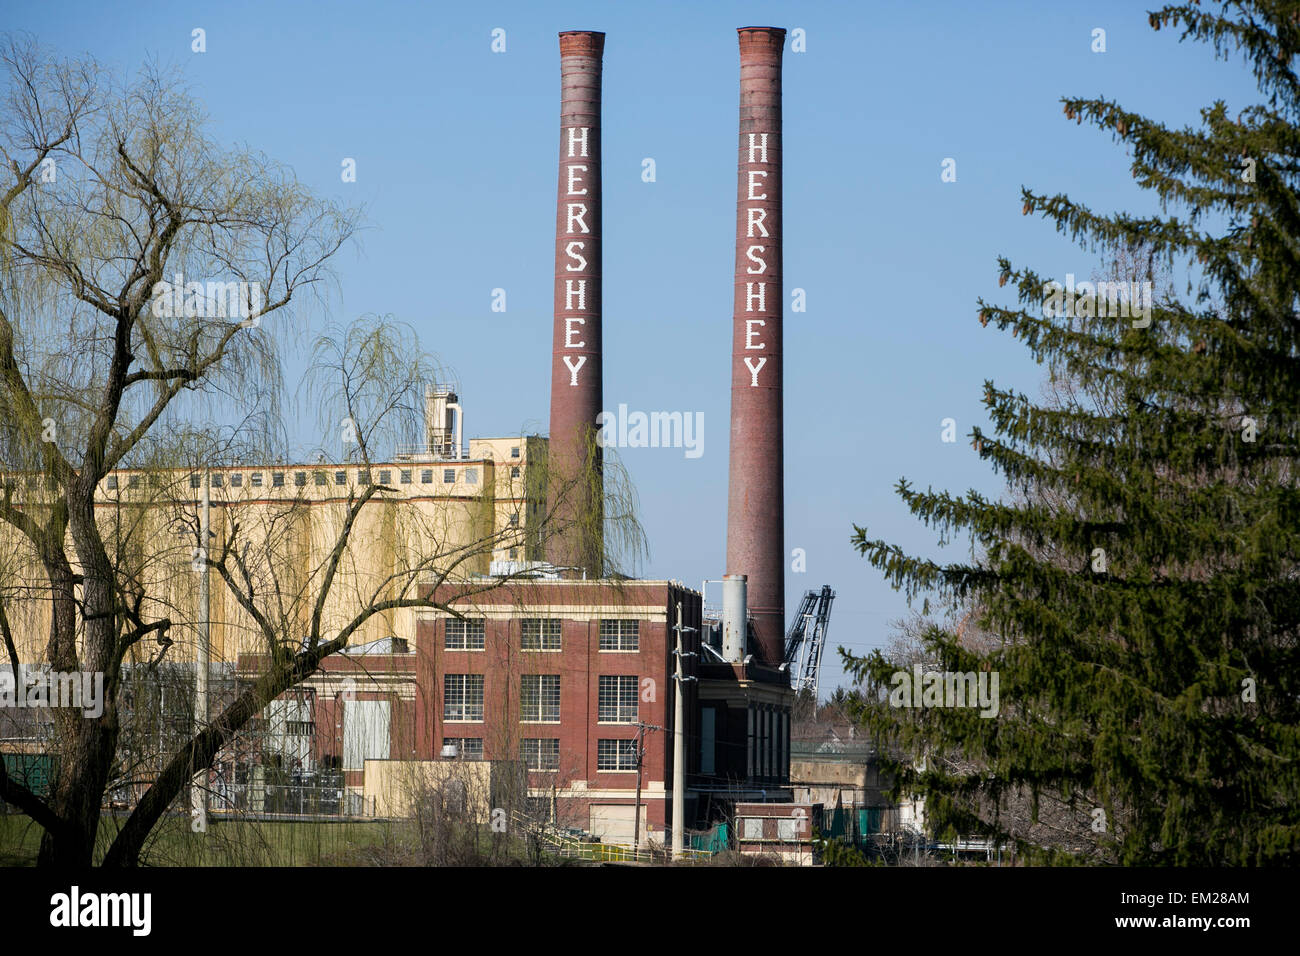 Una vista dell'originale Hershey Chocolate Factory di Hershey, Pennsylvania. Foto Stock